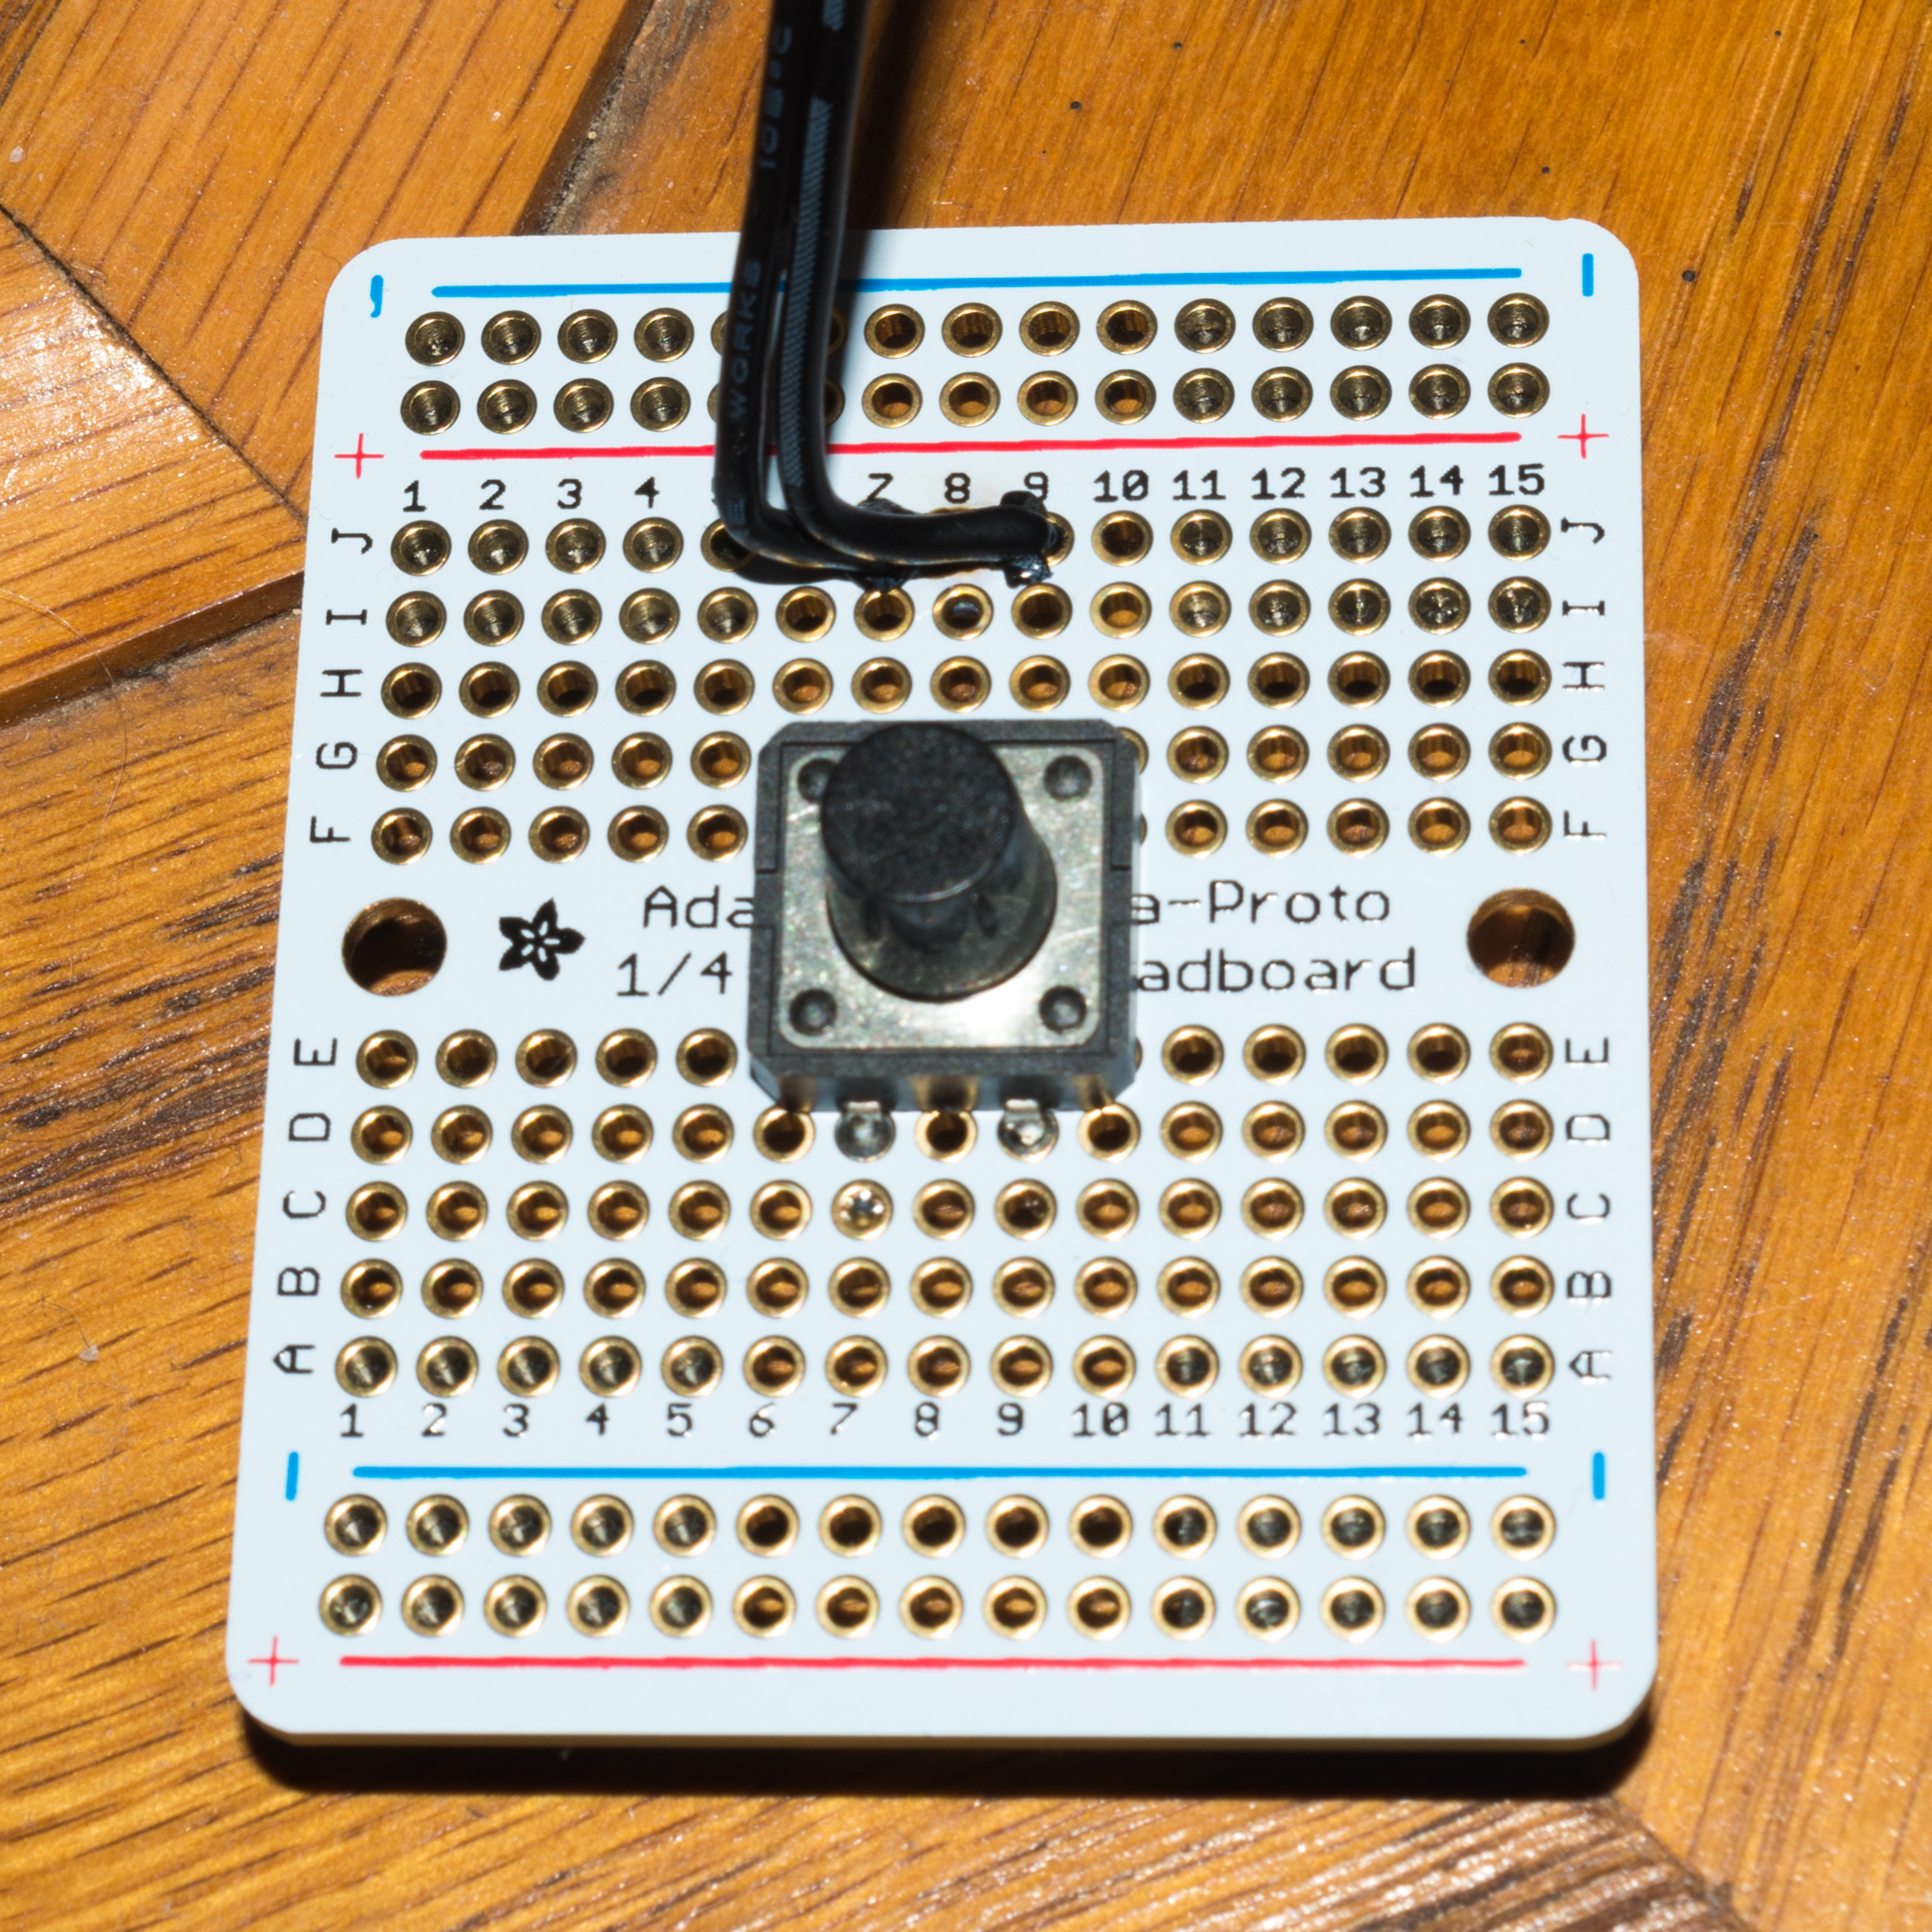 Pushbutton soldered to a Perma-Proto board